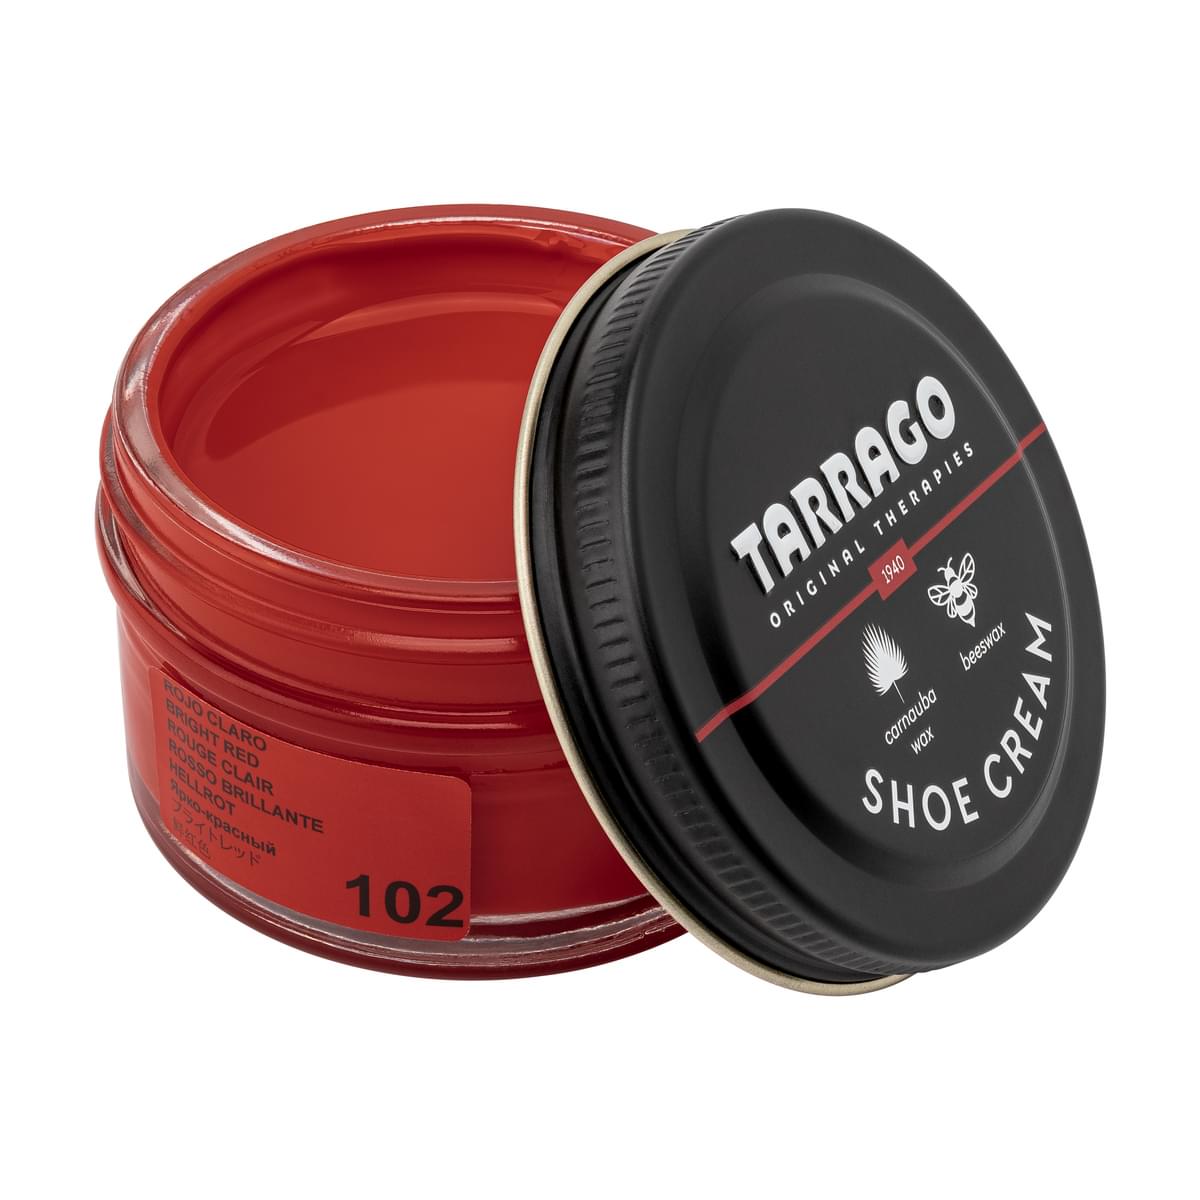 Tarrago Shoe Cream  - Bright Red - 102